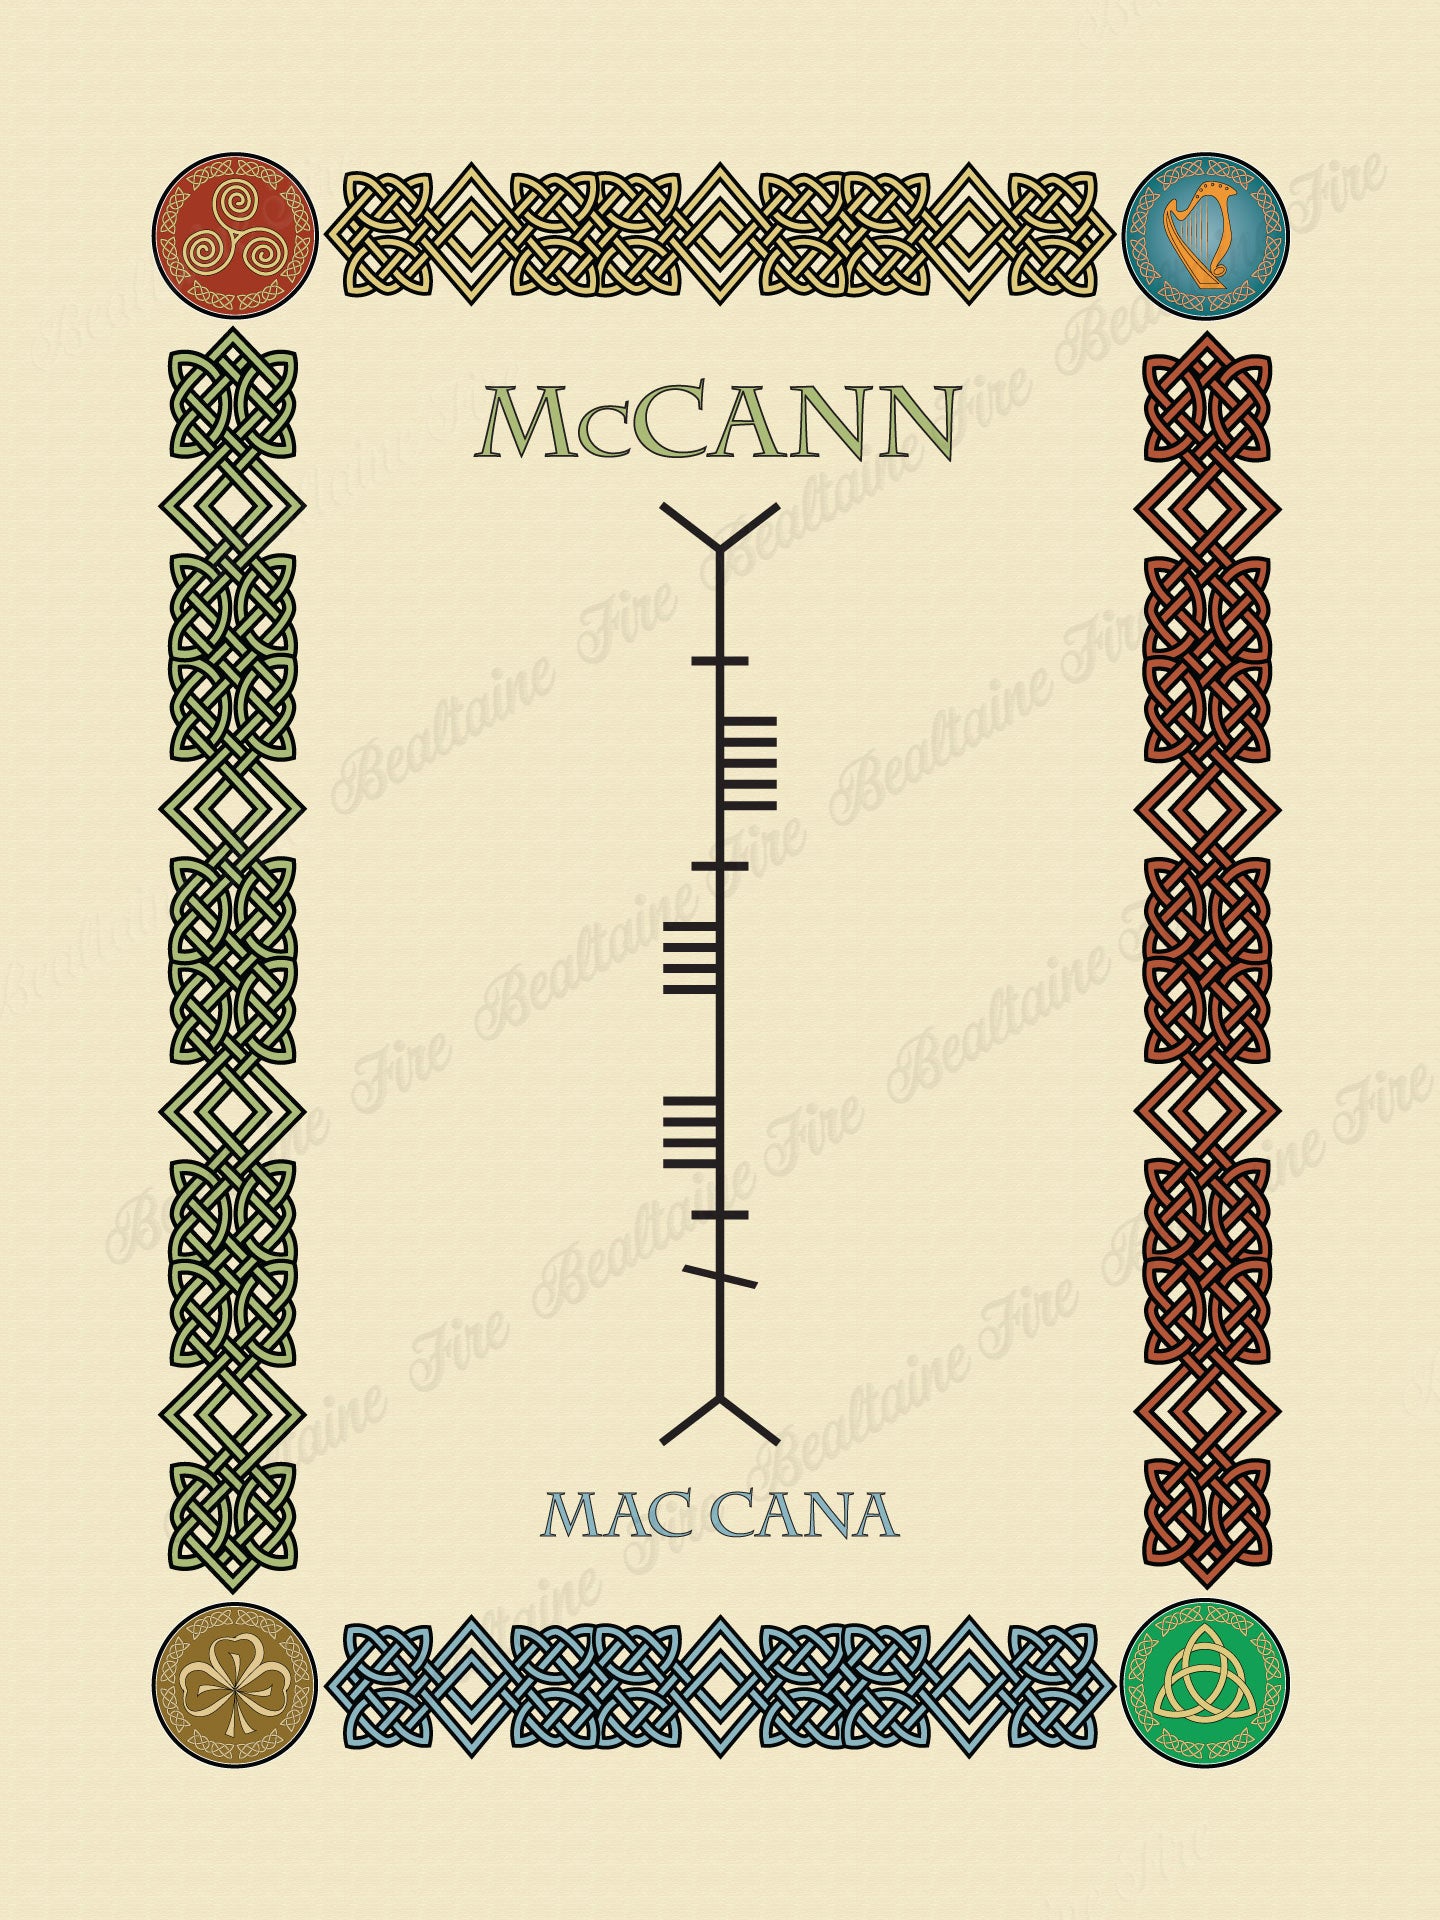 McCann in Old Irish and Ogham - PDF Download